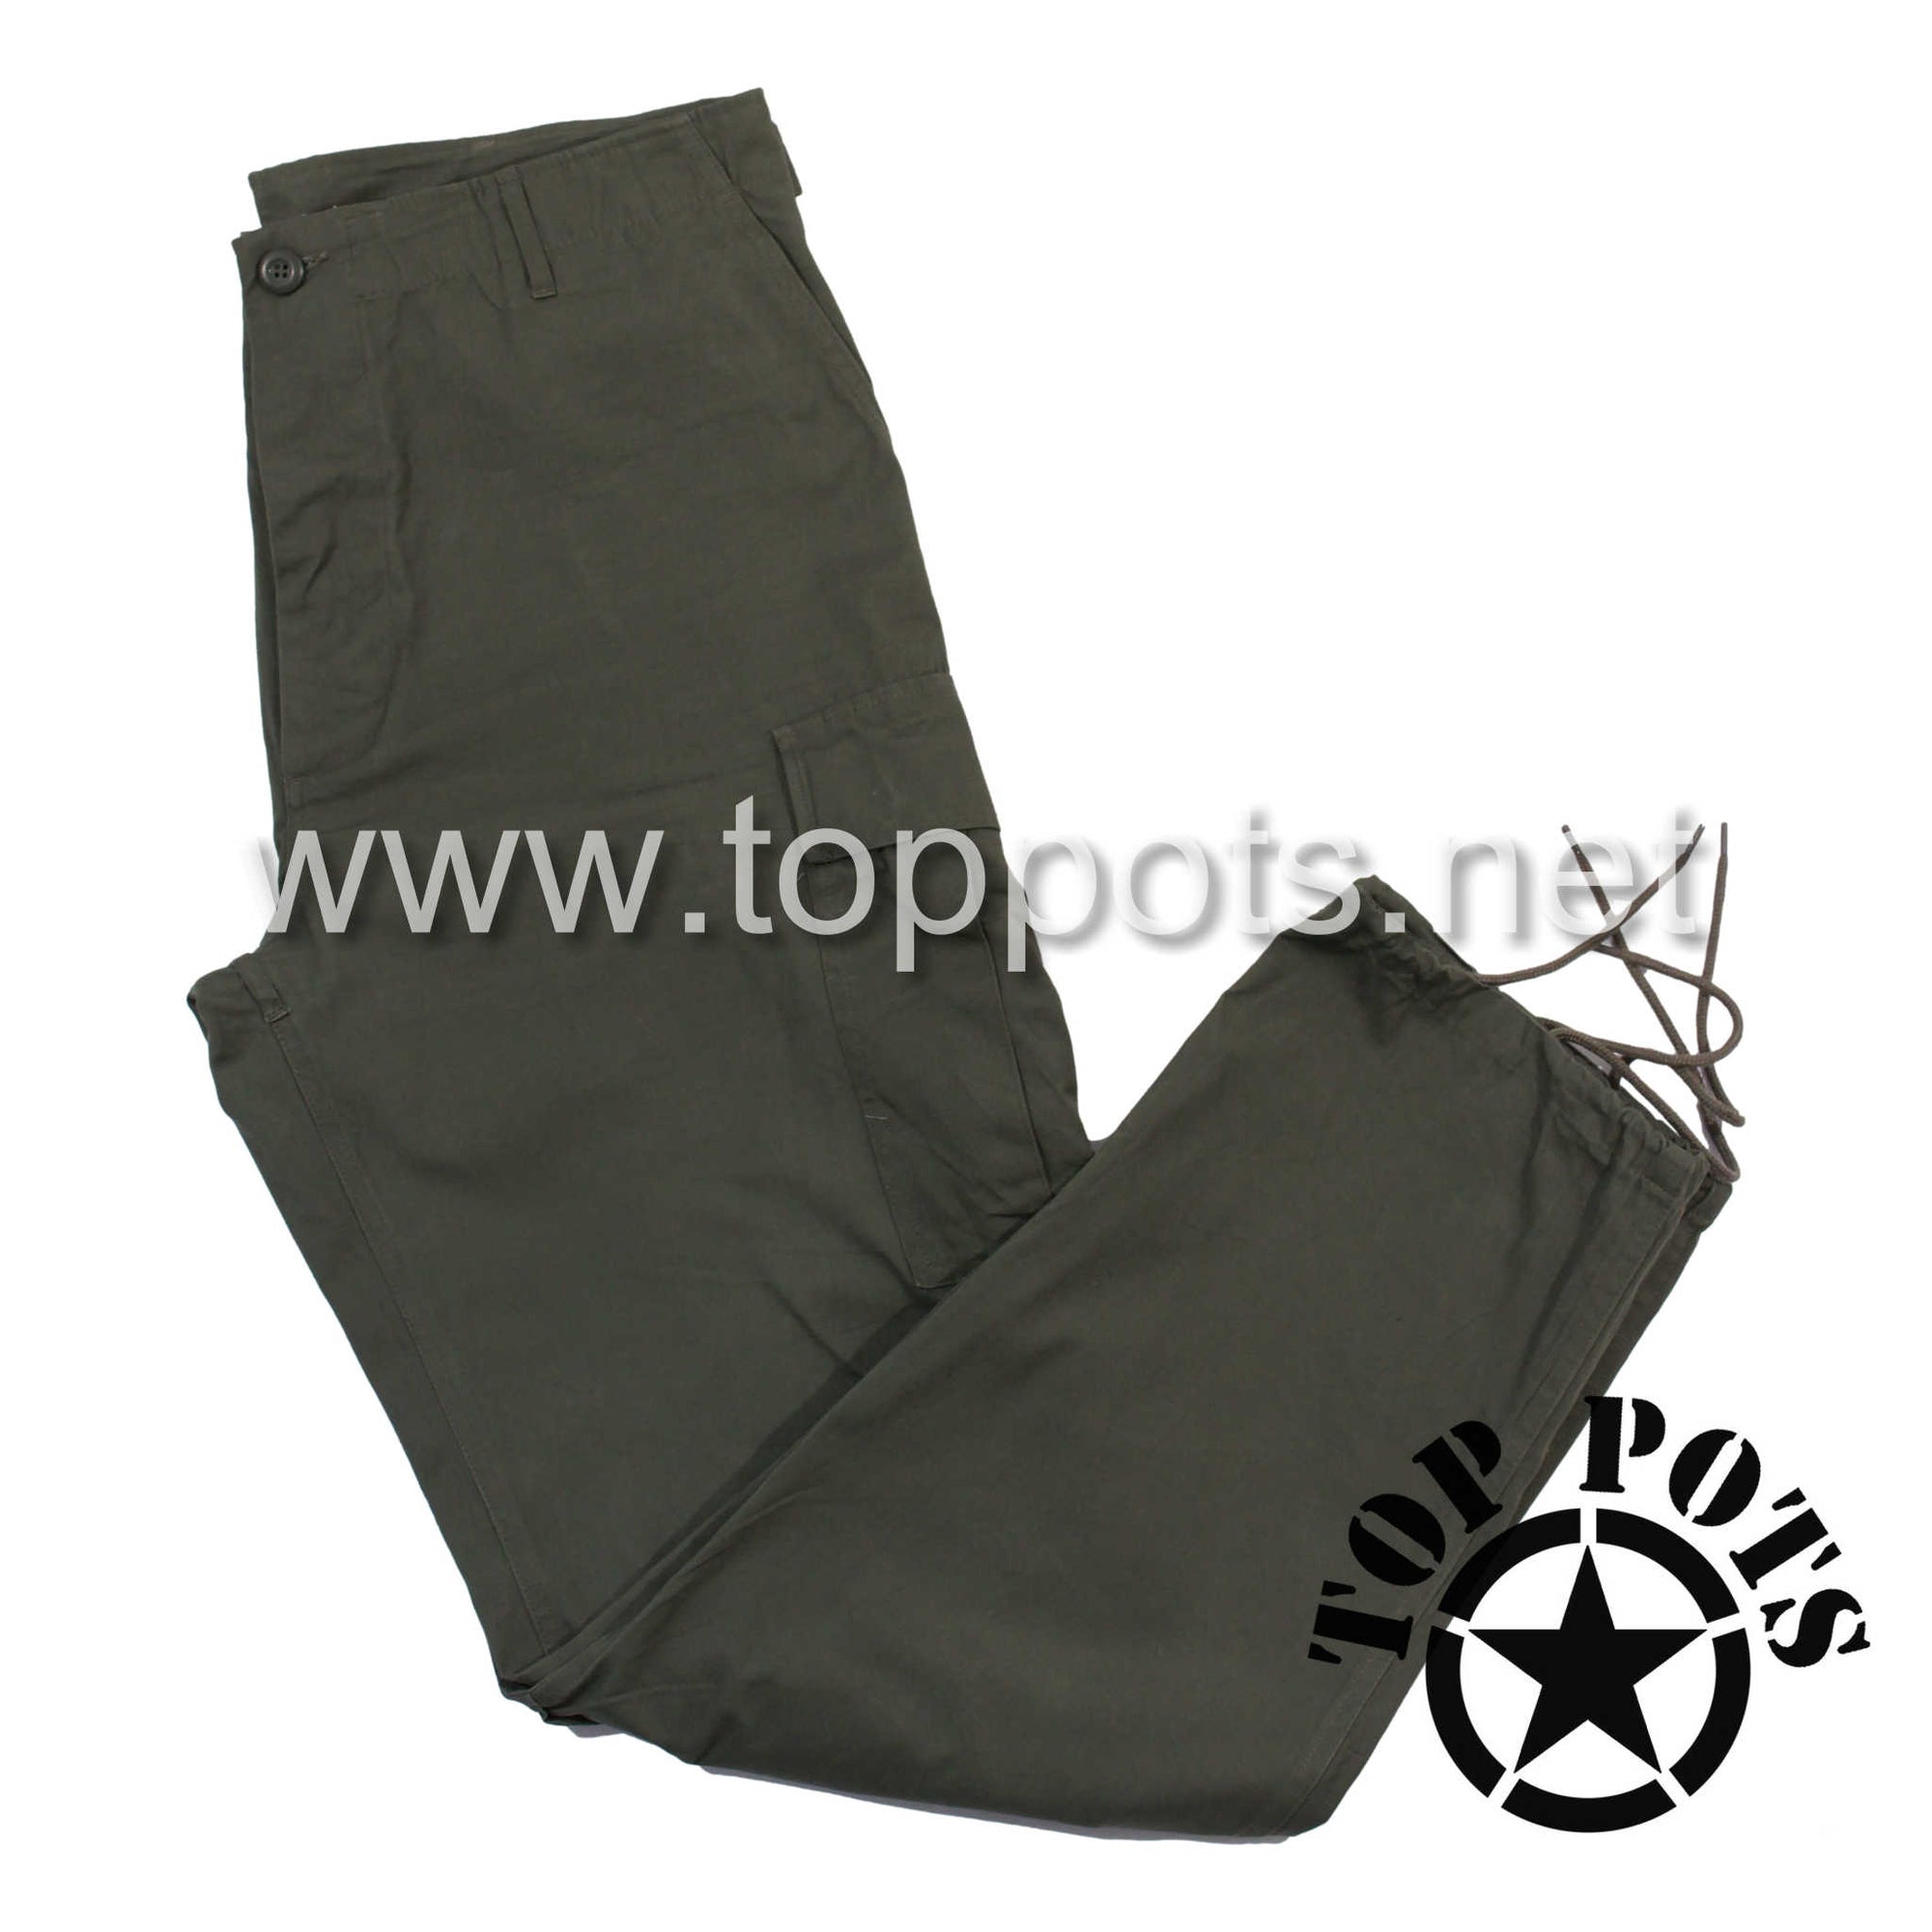 Vietnam War US Army Reproduction Ripstop Poplin Tropical Jungle Uniform Olive Drab Fatigue Trouser Pants – Third Pattern